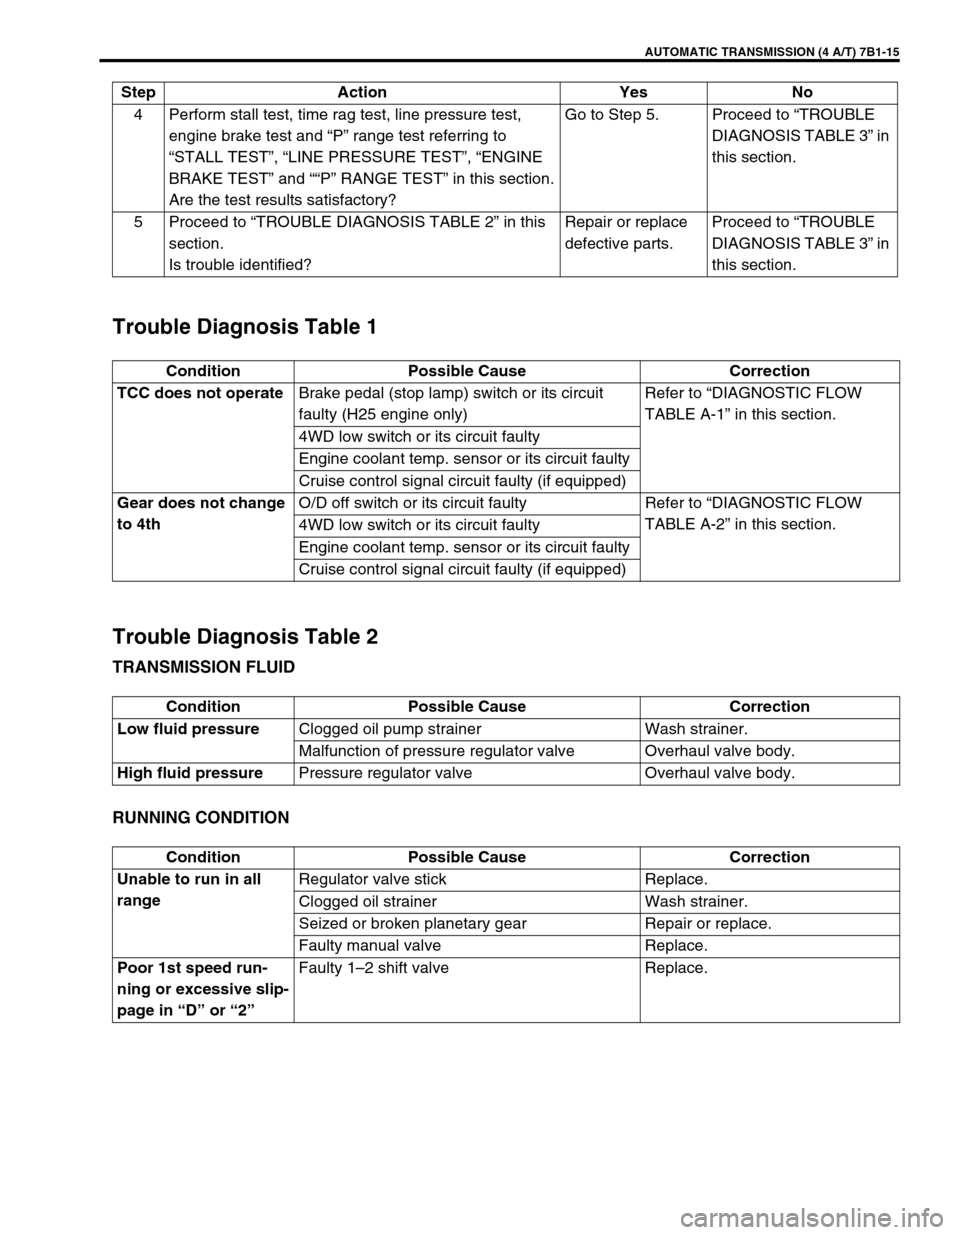 SUZUKI GRAND VITARA 2001 2.G User Guide AUTOMATIC TRANSMISSION (4 A/T) 7B1-15
Trouble Diagnosis Table 1
Trouble Diagnosis Table 2
TRANSMISSION FLUID
RUNNING CONDITION
4 Perform stall test, time rag test, line pressure test, 
engine brake te